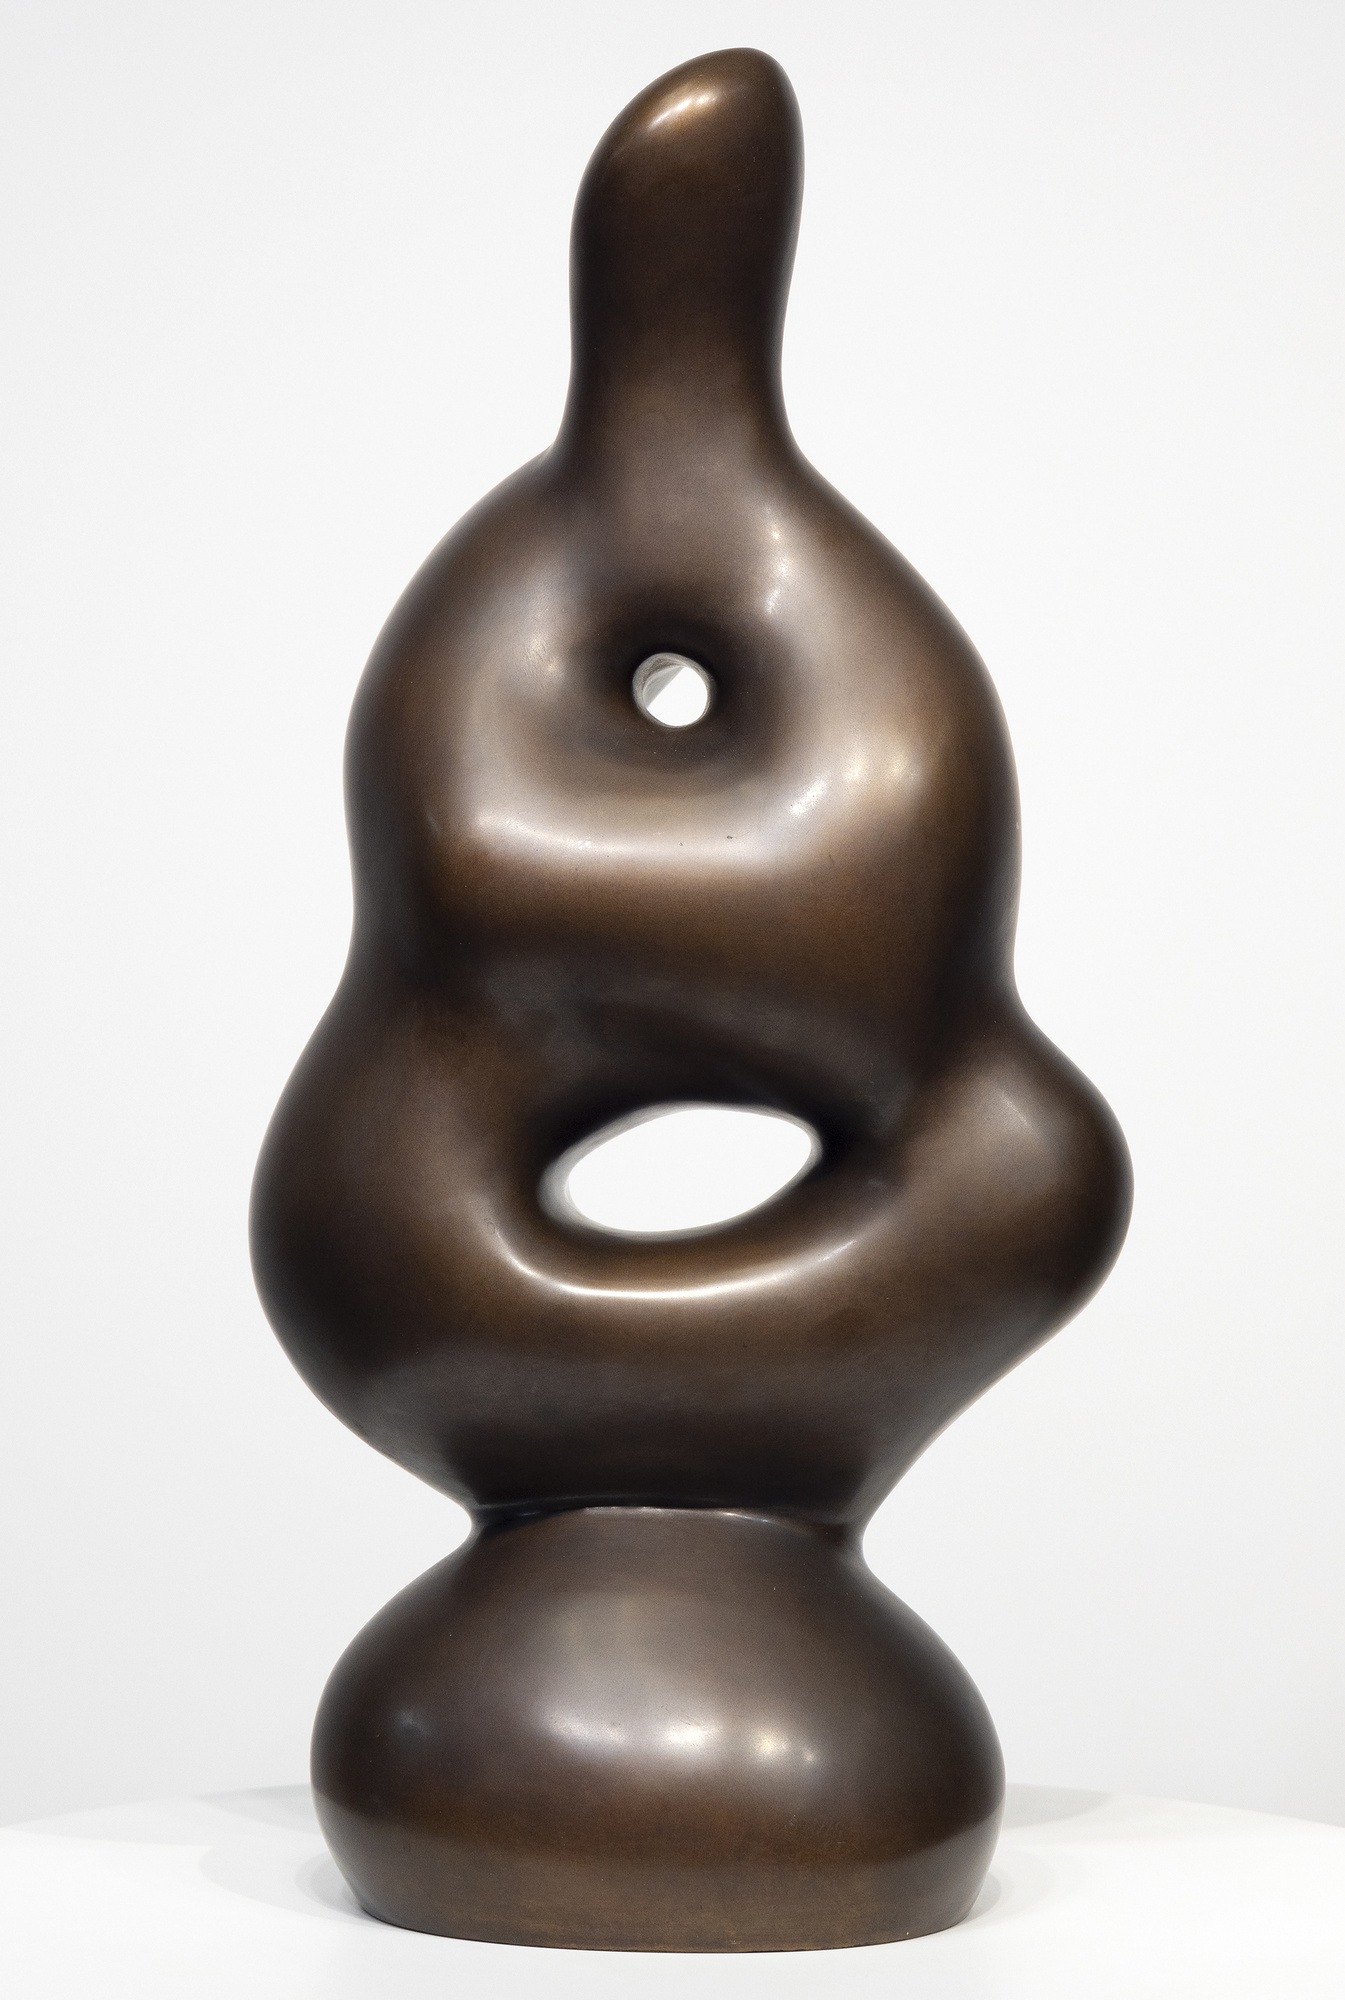 JEAN ARP - 雕塑神话 - 青铜 - 25 x 9 1/2 x 12 in.